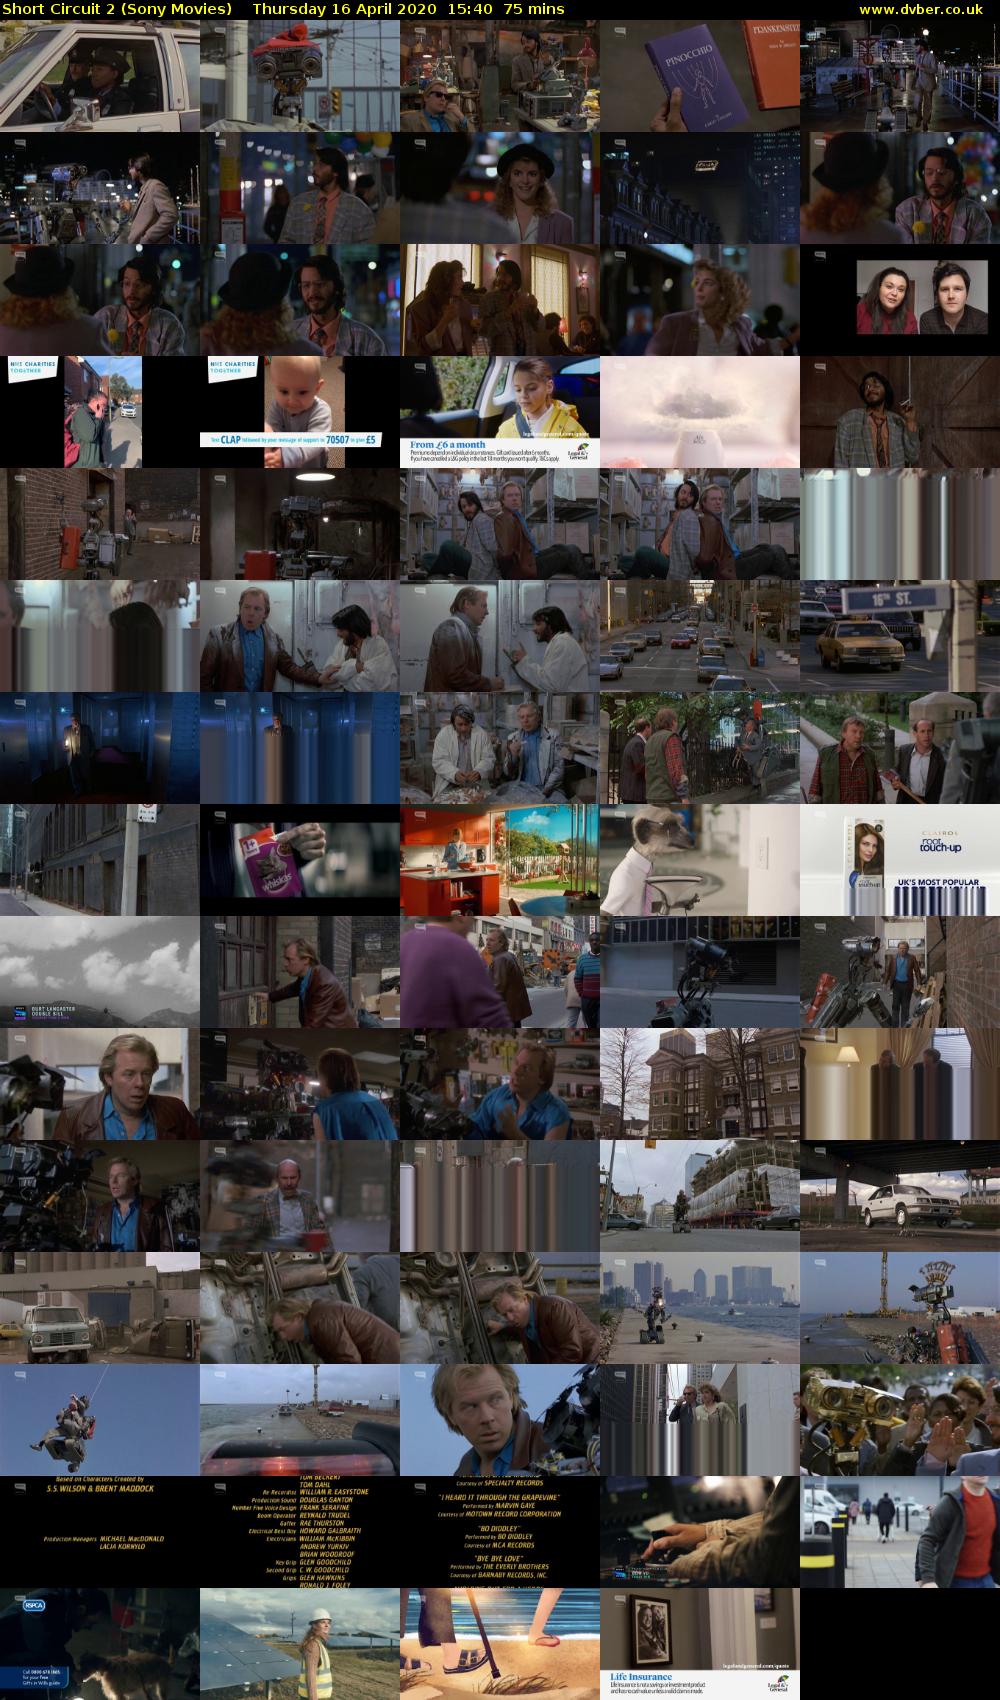 Short Circuit 2 (Sony Movies) Thursday 16 April 2020 15:40 - 16:55